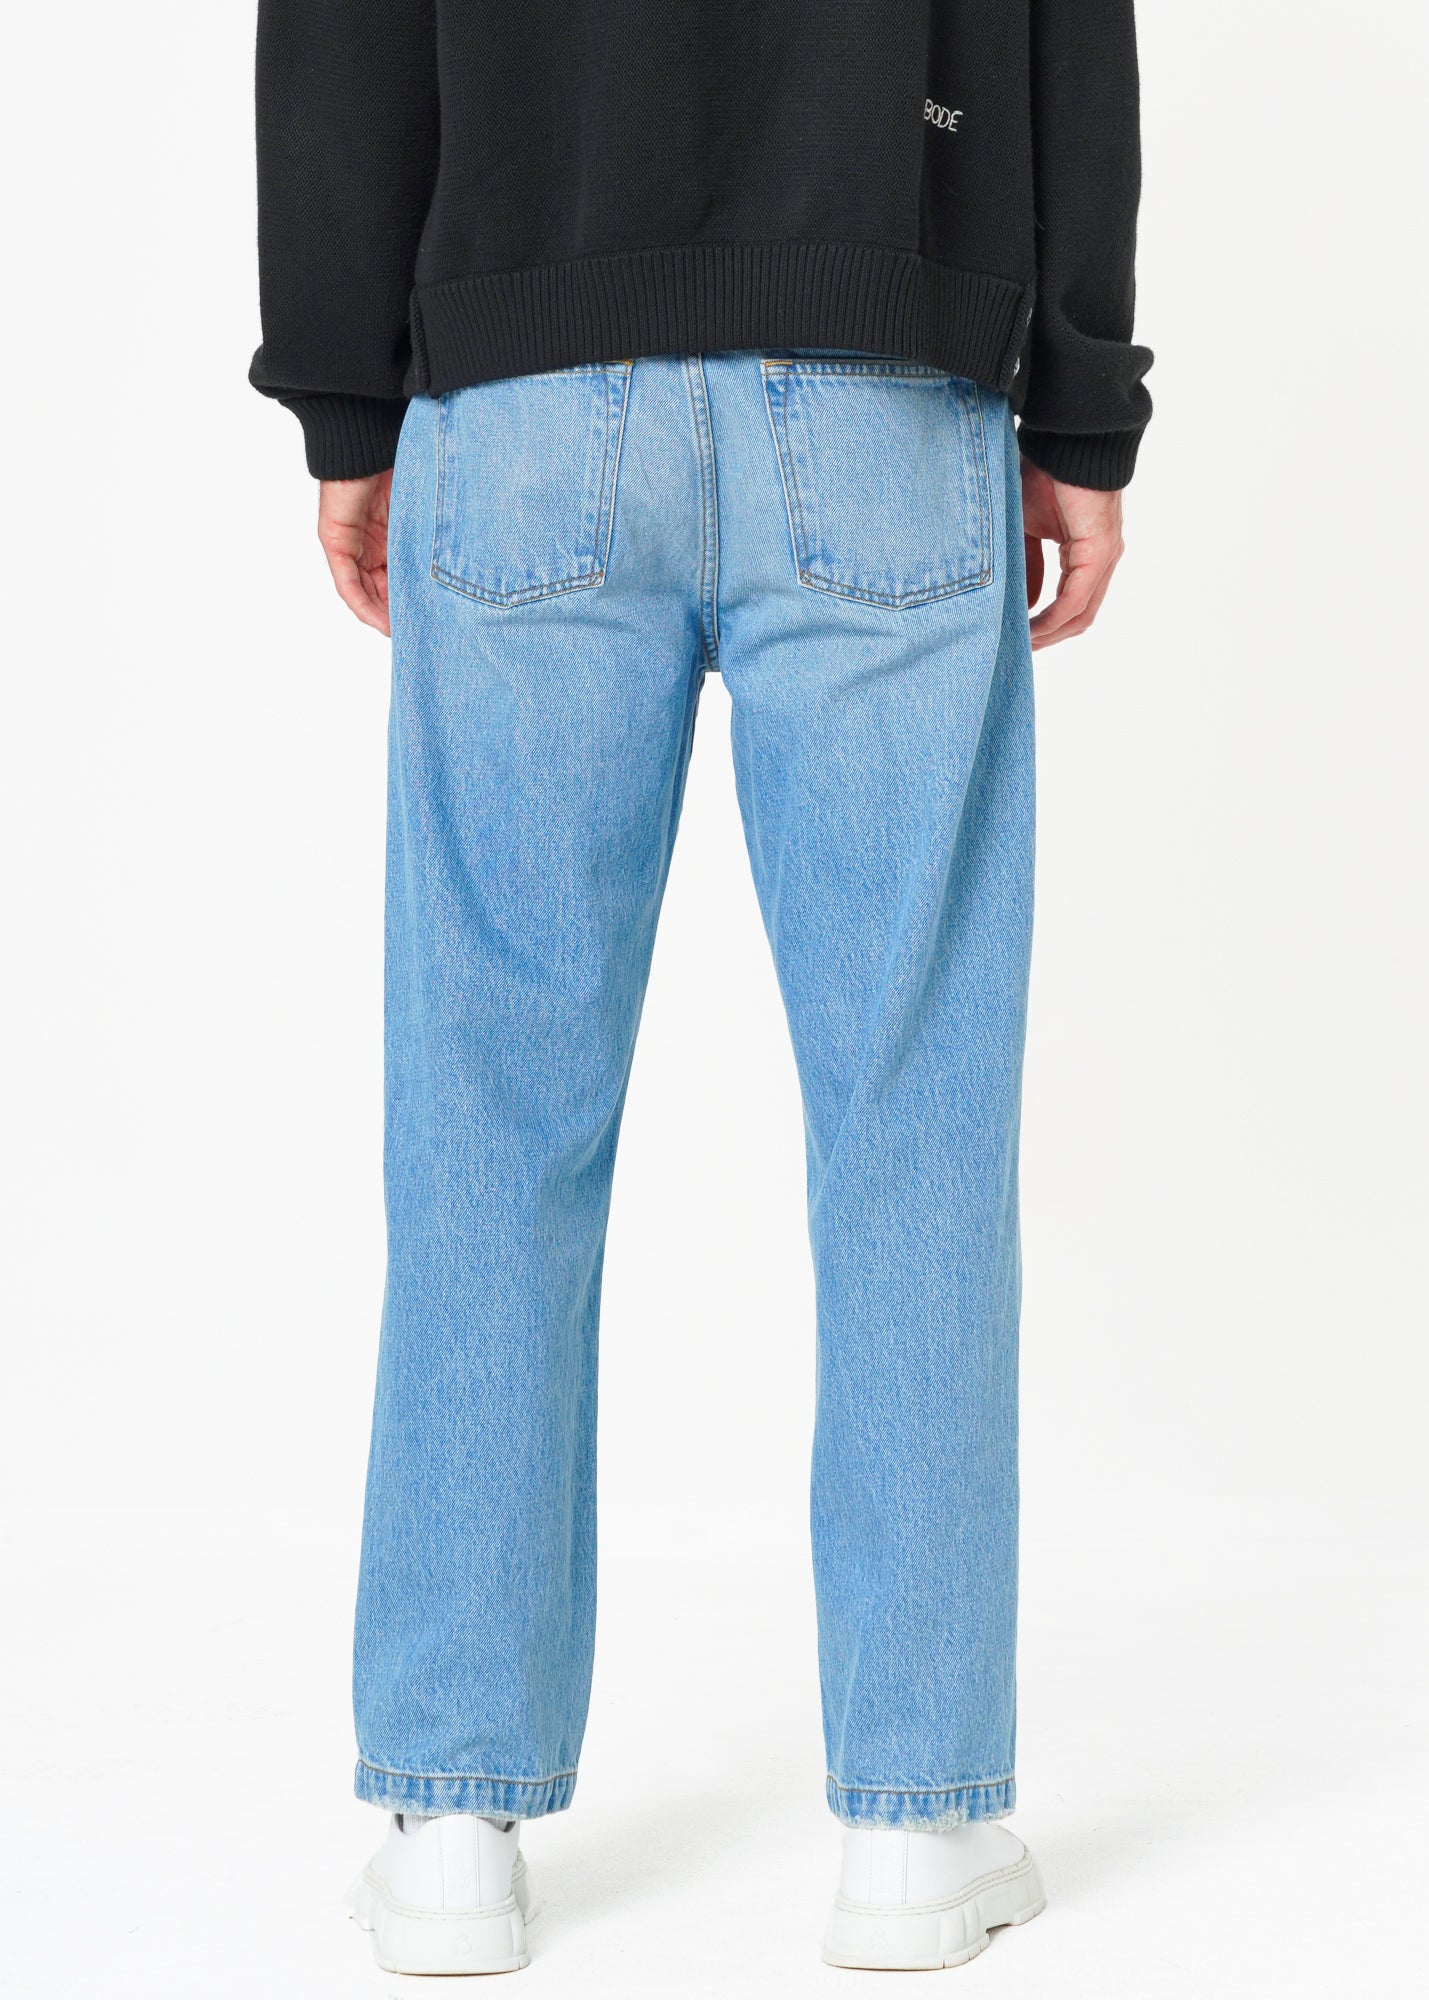 Noend Men's Classic Fit Rigid Jeans